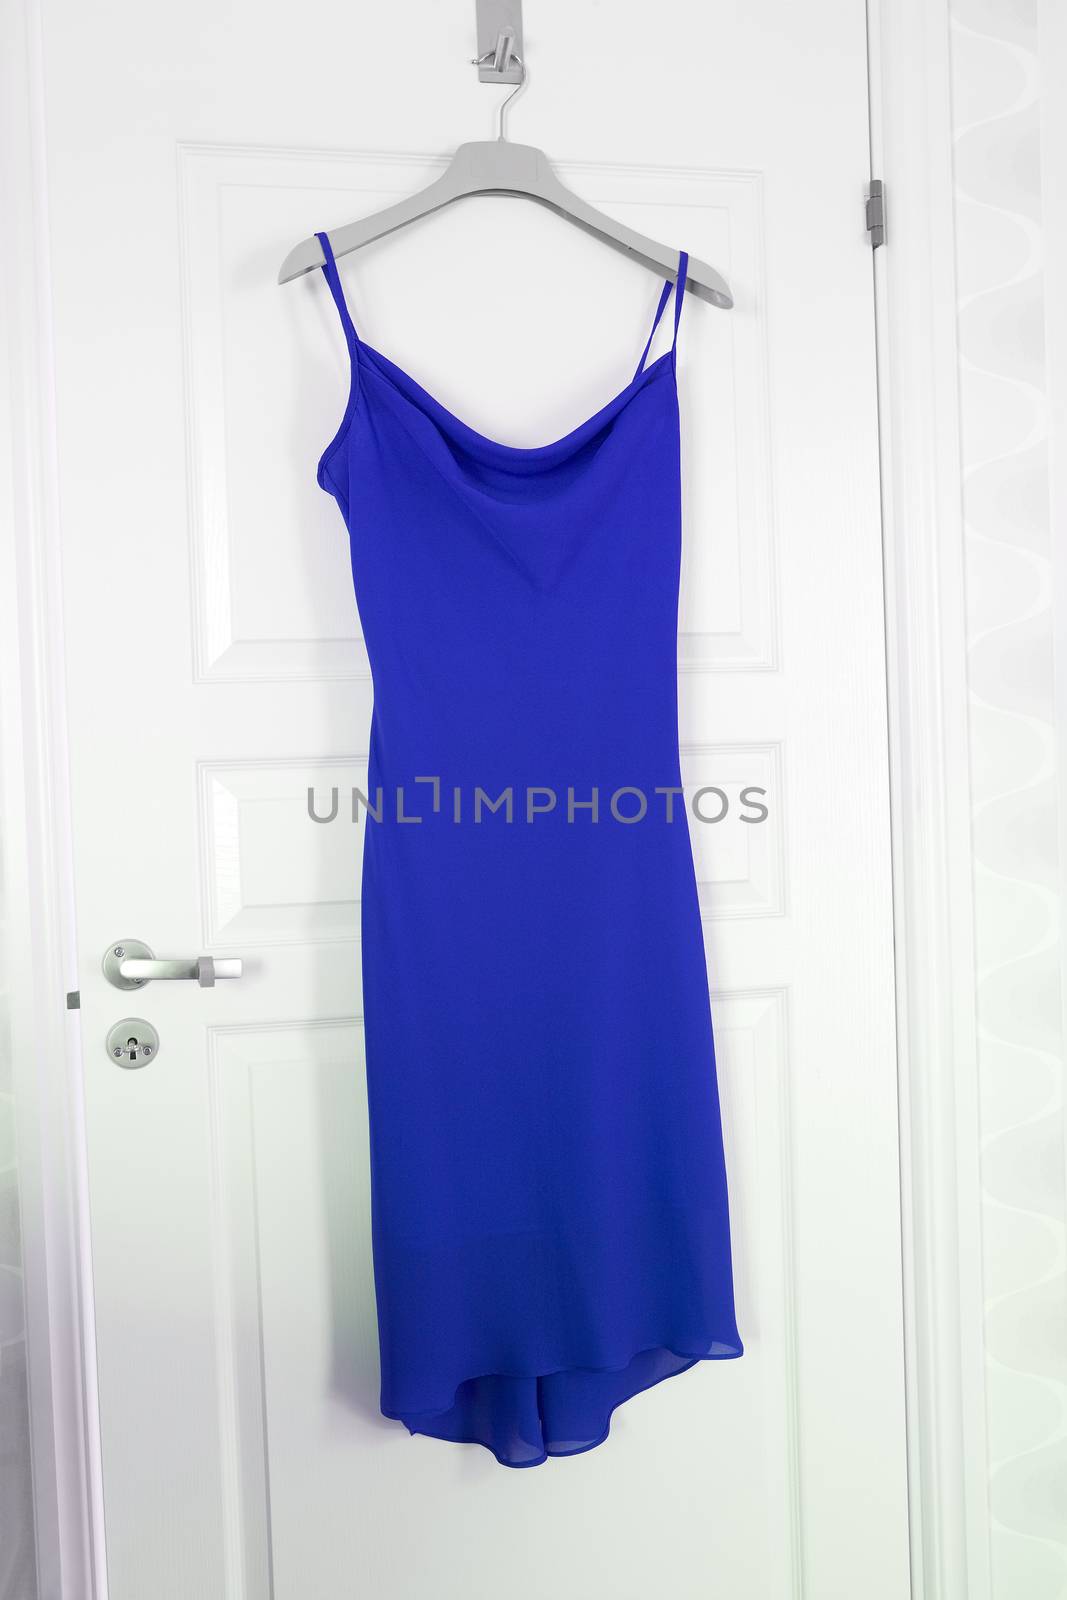 Blue Dress by gemenacom